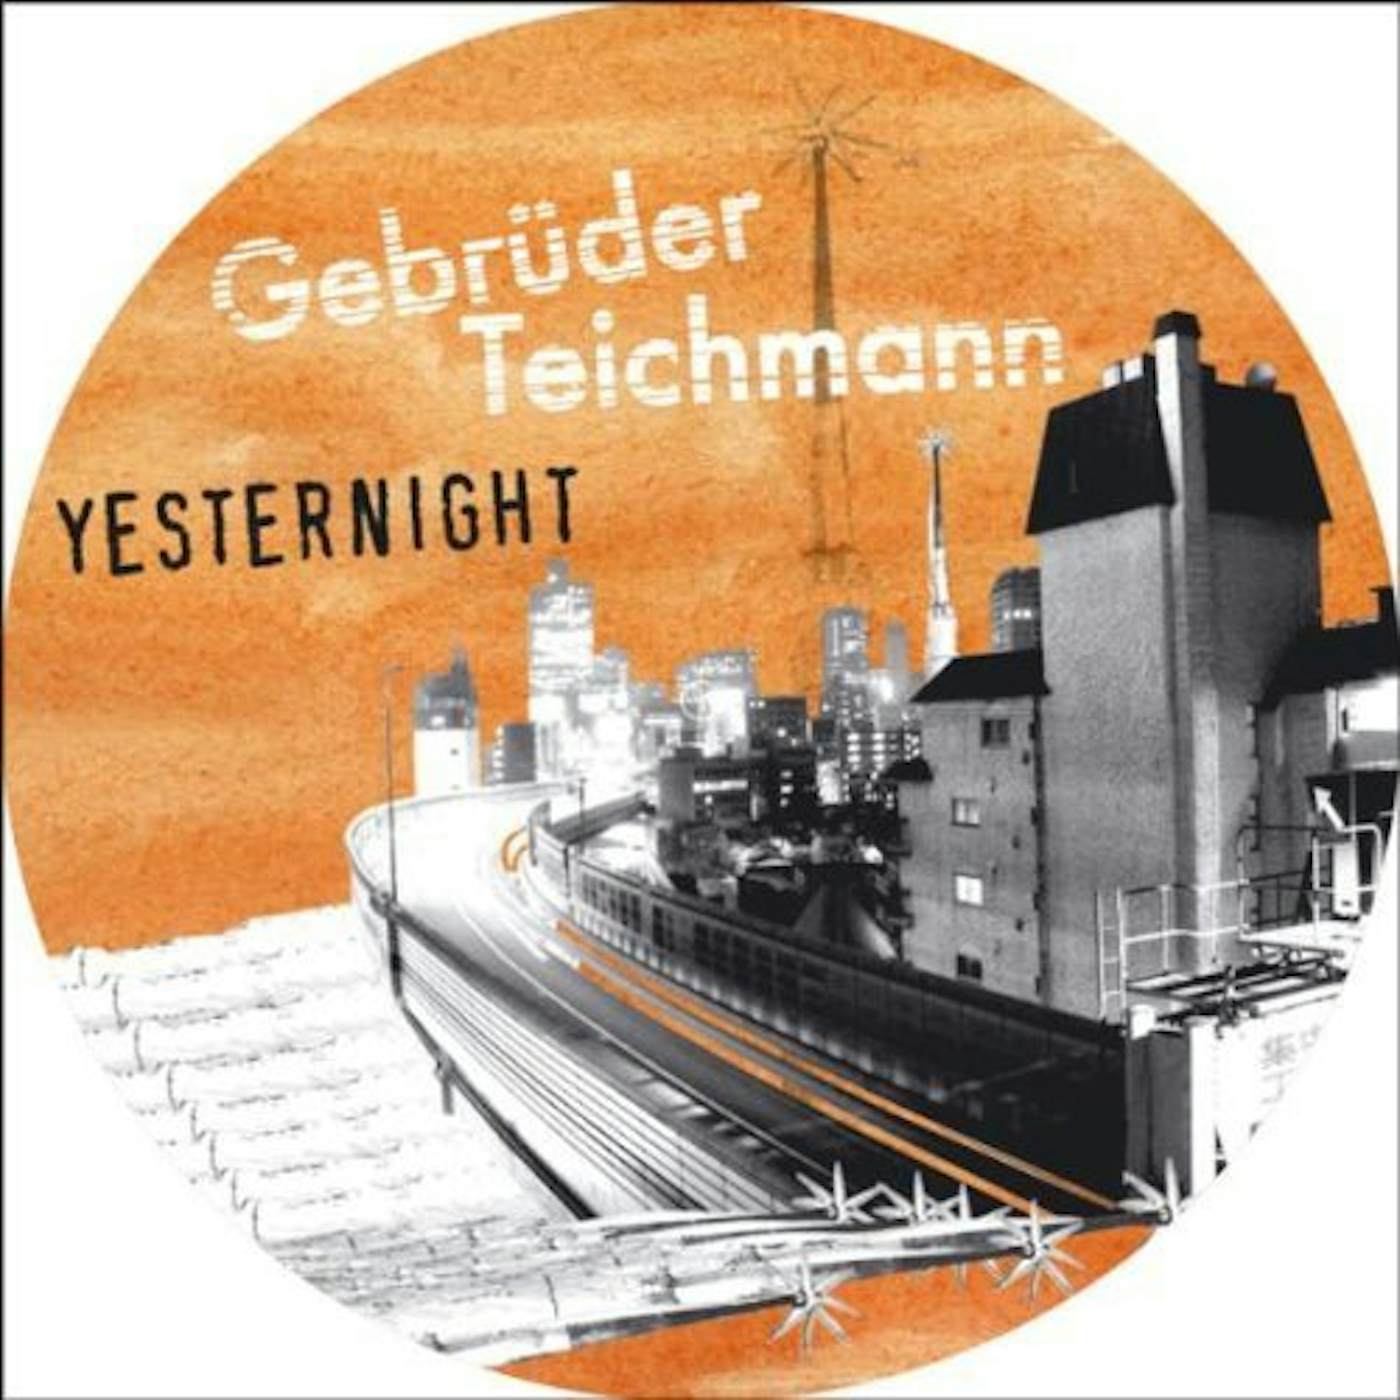 Gerruder Teichmann YESTERNIGHT Vinyl Record